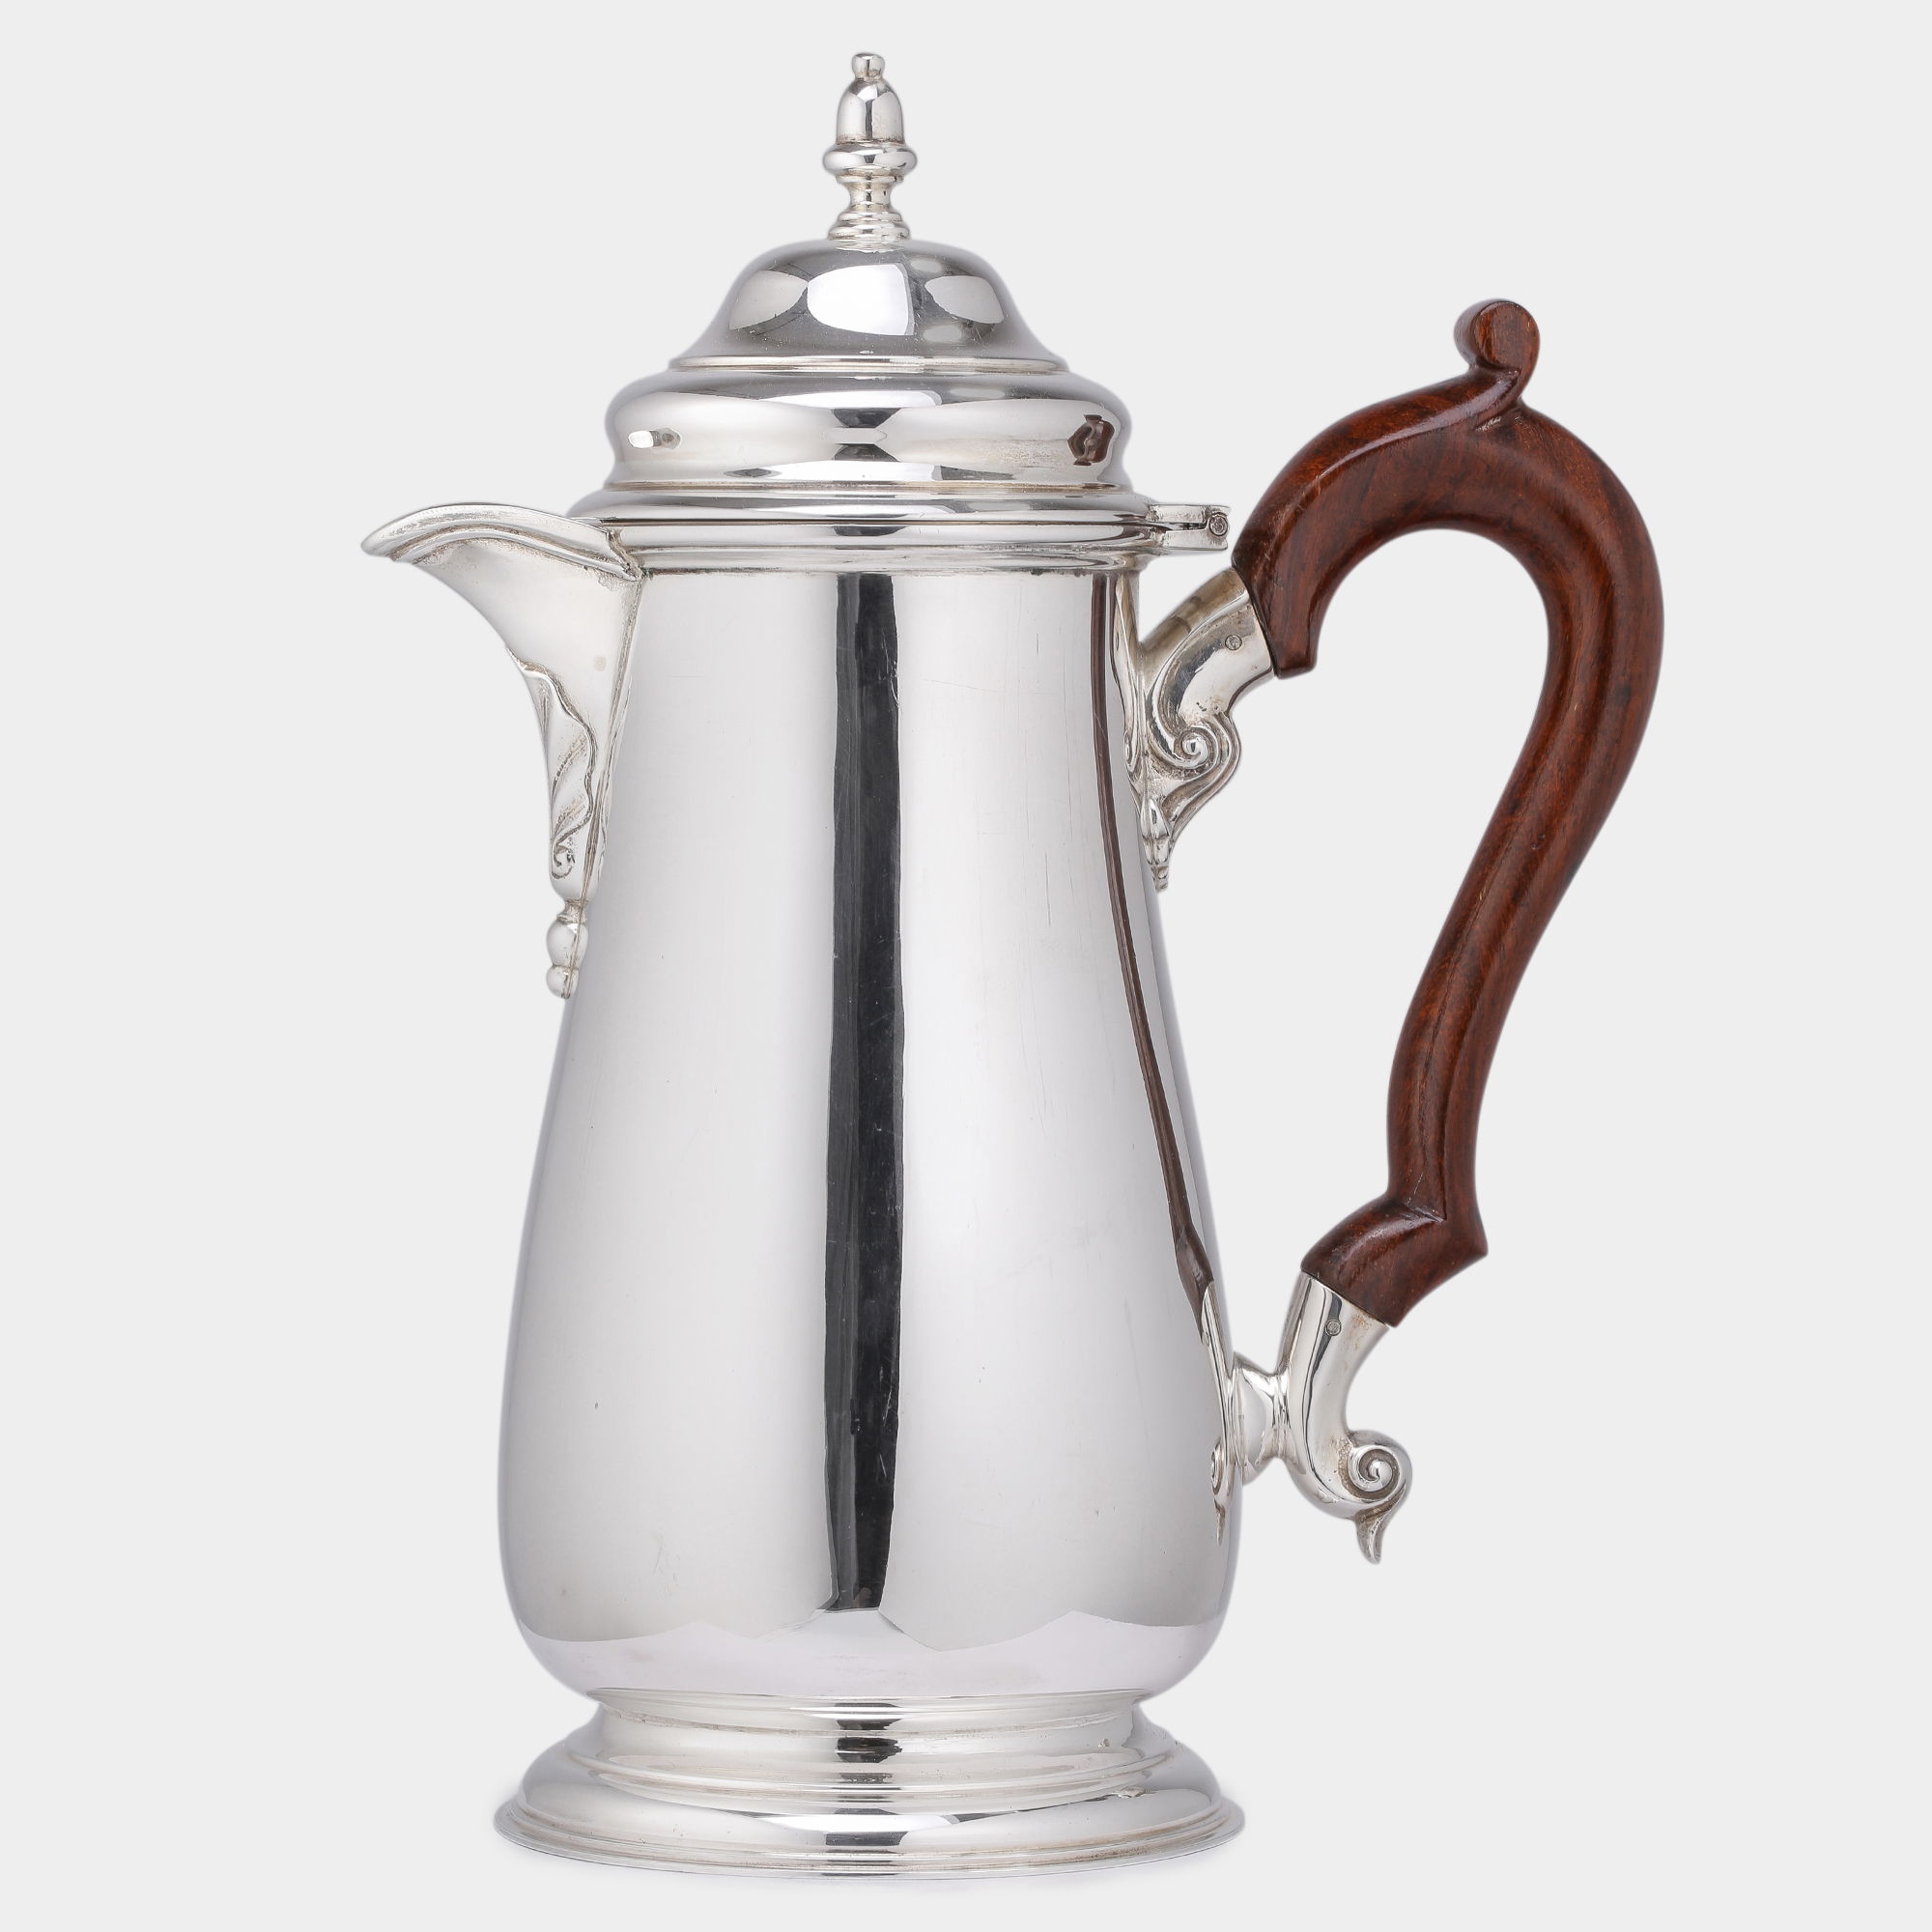 Antique silver coffee pot